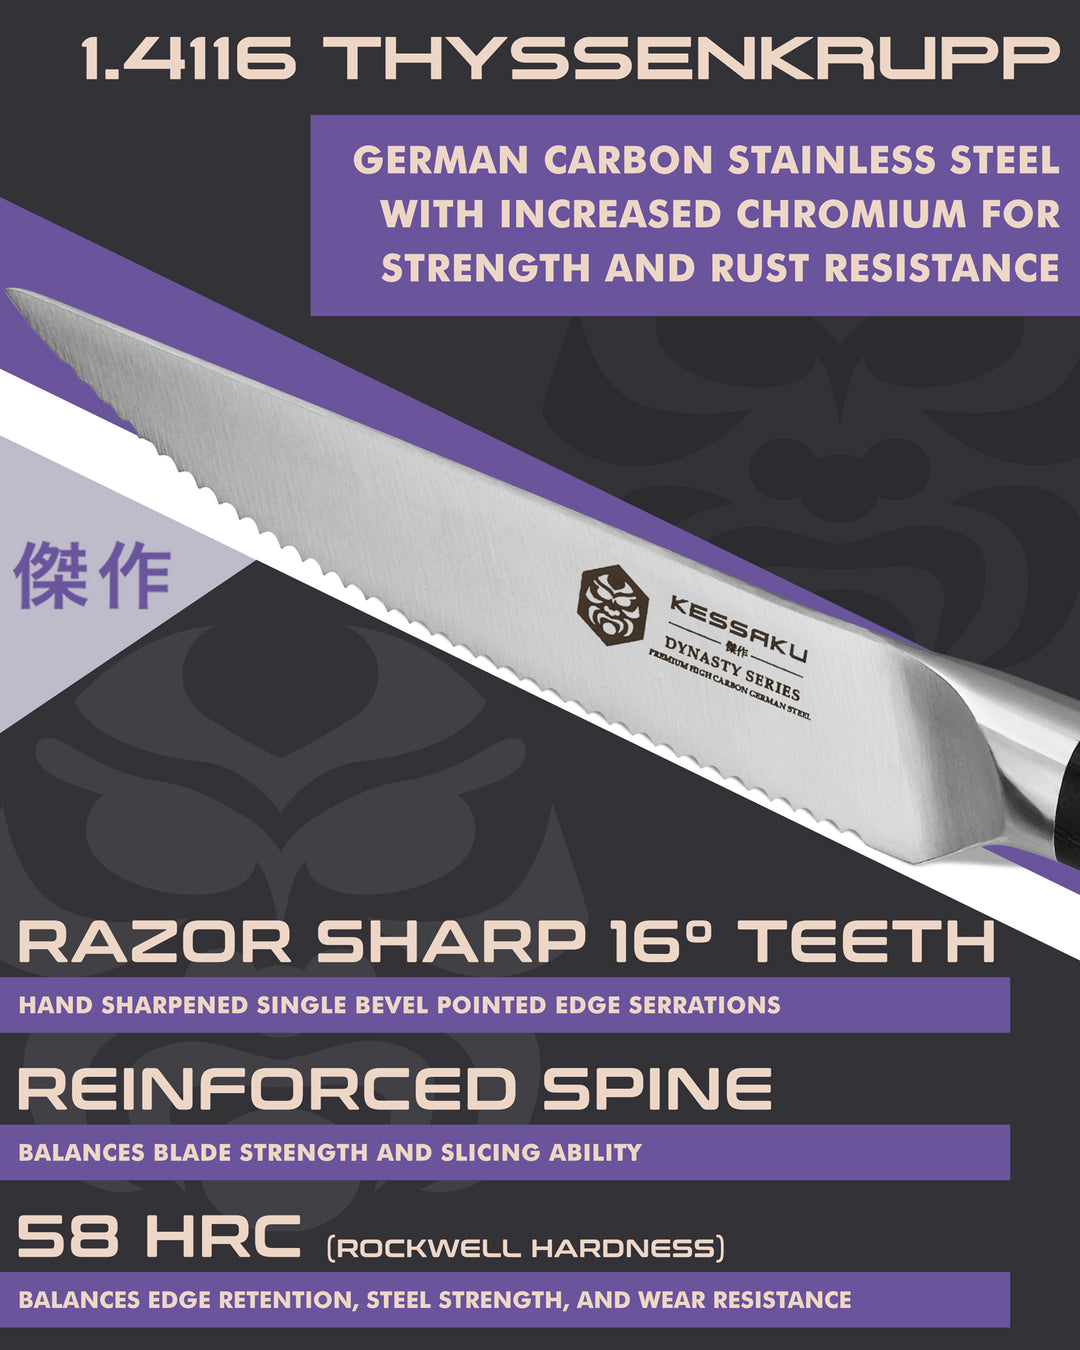 Kessaku Dynasty Steak Knife blade features: 1.4116 German steel, 58 HRC, sharpened to 16 degrees, reinforced spine